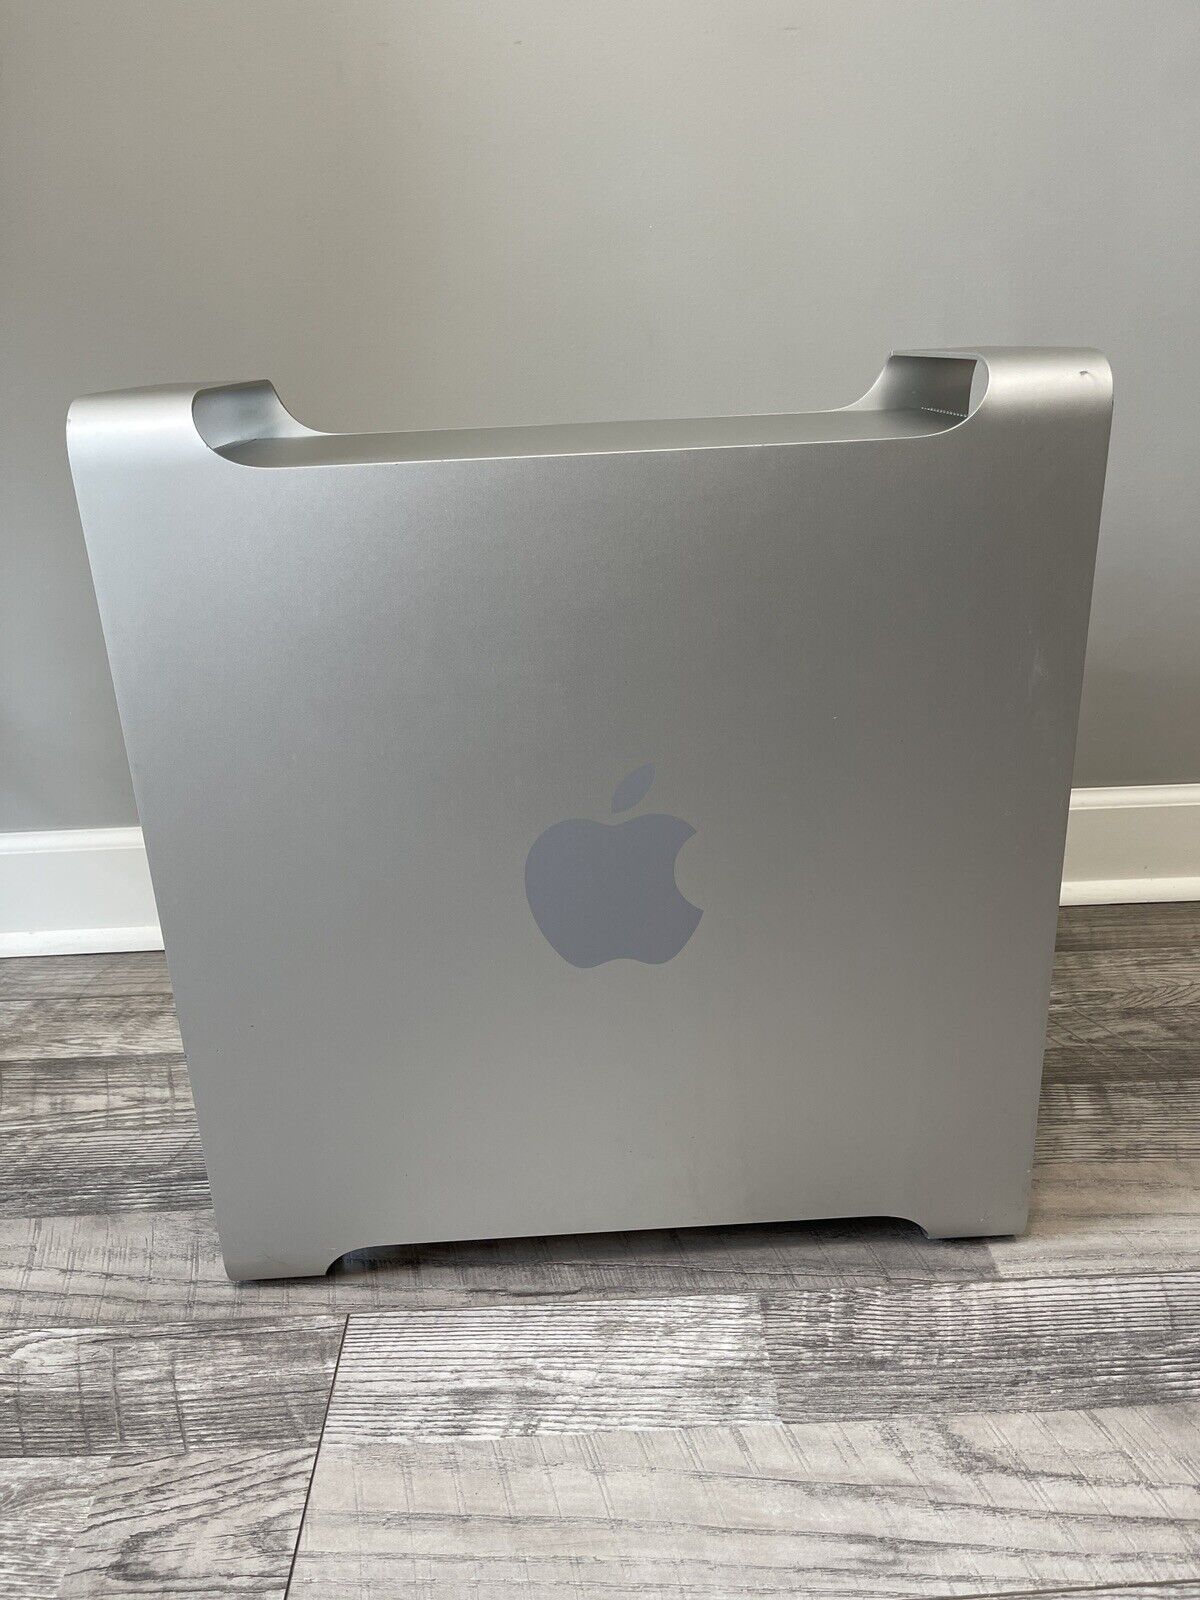 Apple Mac Pro A1186 Desktop 2x 2.66 GHz Dual Core Intel Xeon 5Gb 